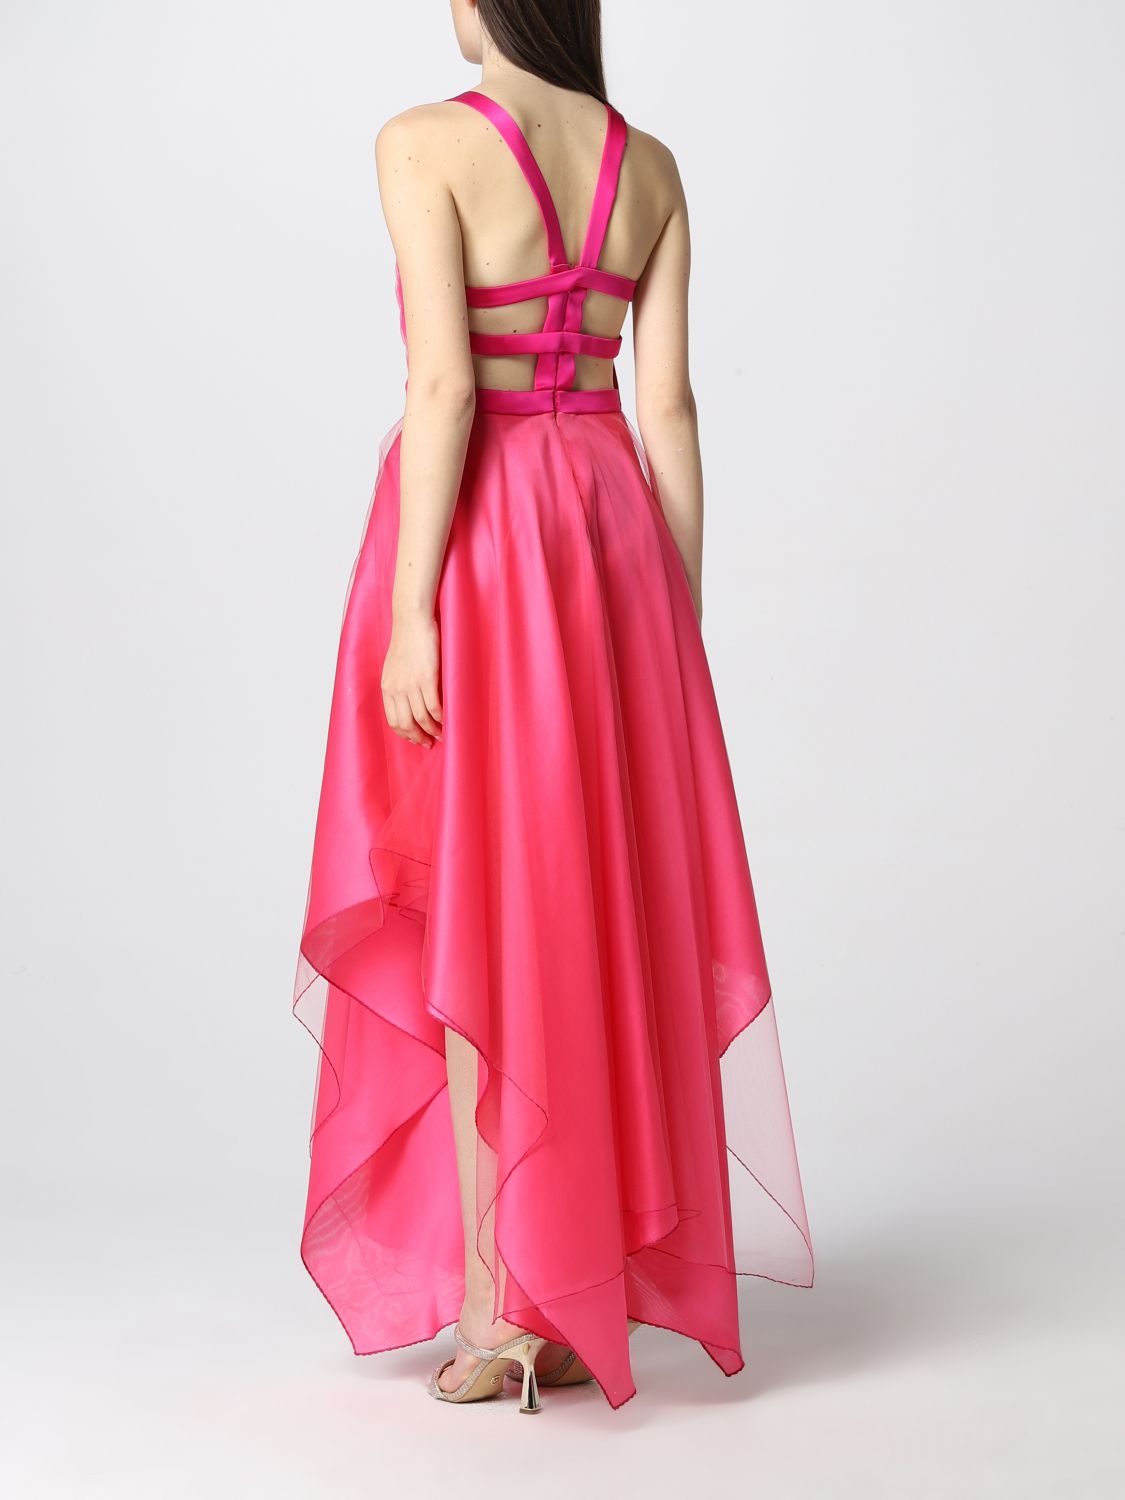 GIORGIO ARMANI: long chiffon dress - Pink  Giorgio Armani dress  2SHVA0B3T03JR online at